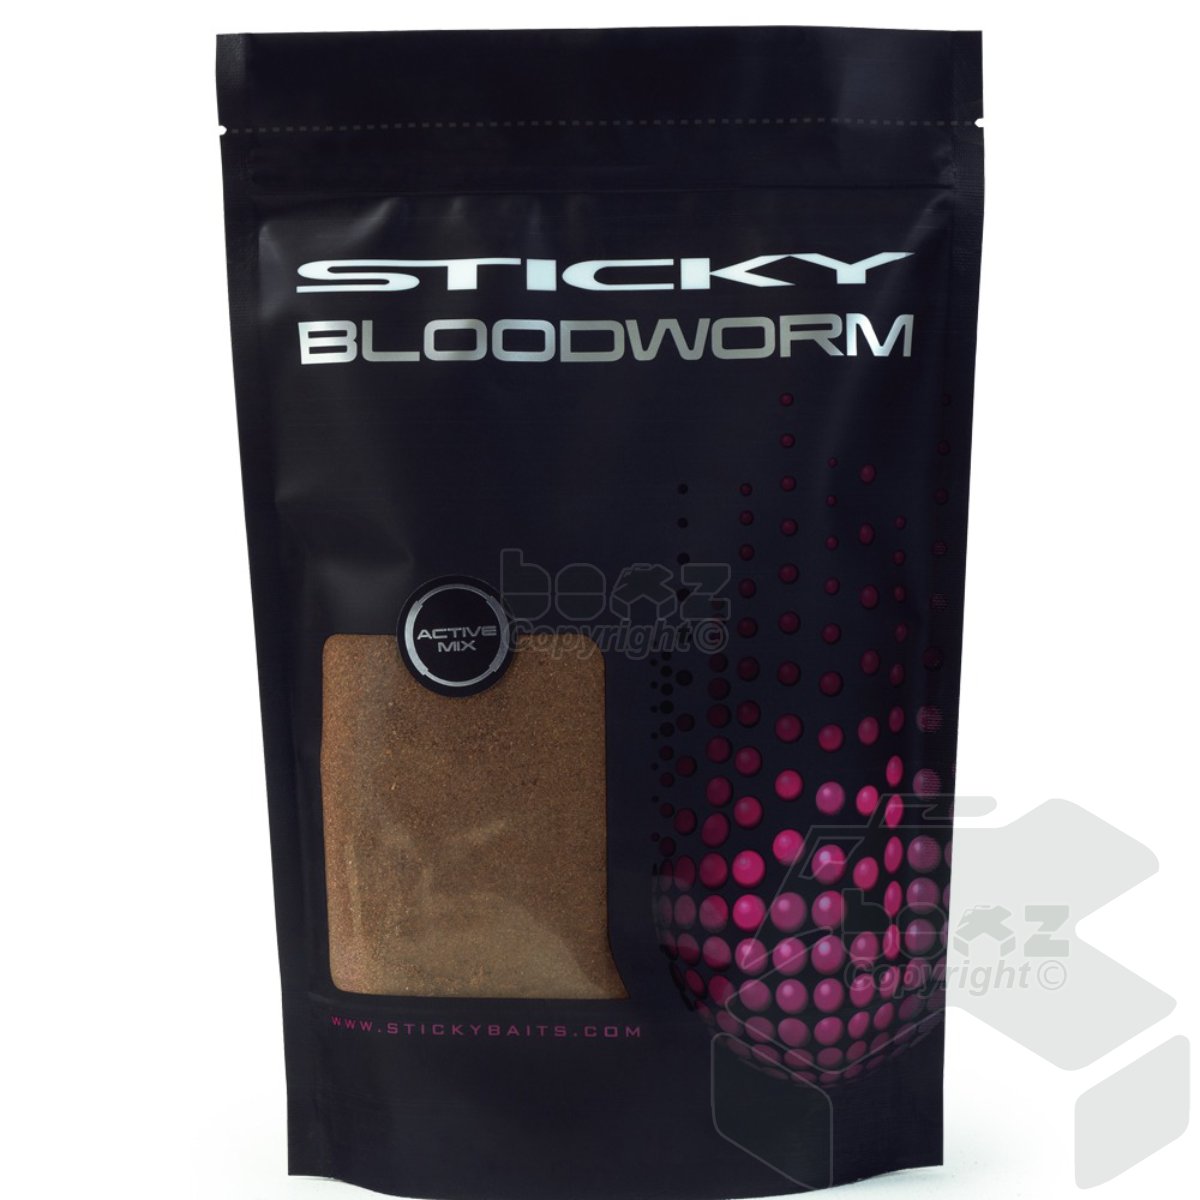 Sticky Bloodworm Active Mix 900g / 2.5kg Bag